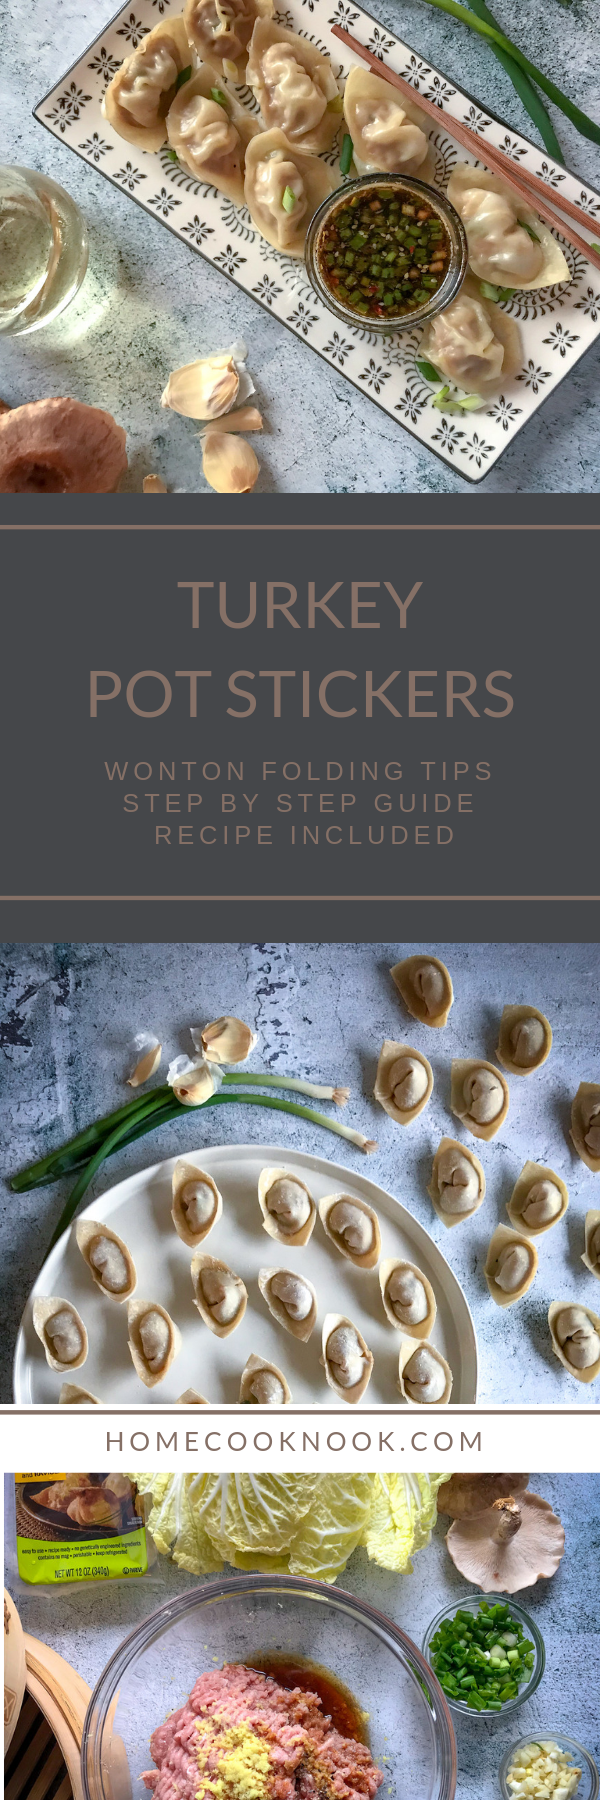 Turkey Pot Stickers